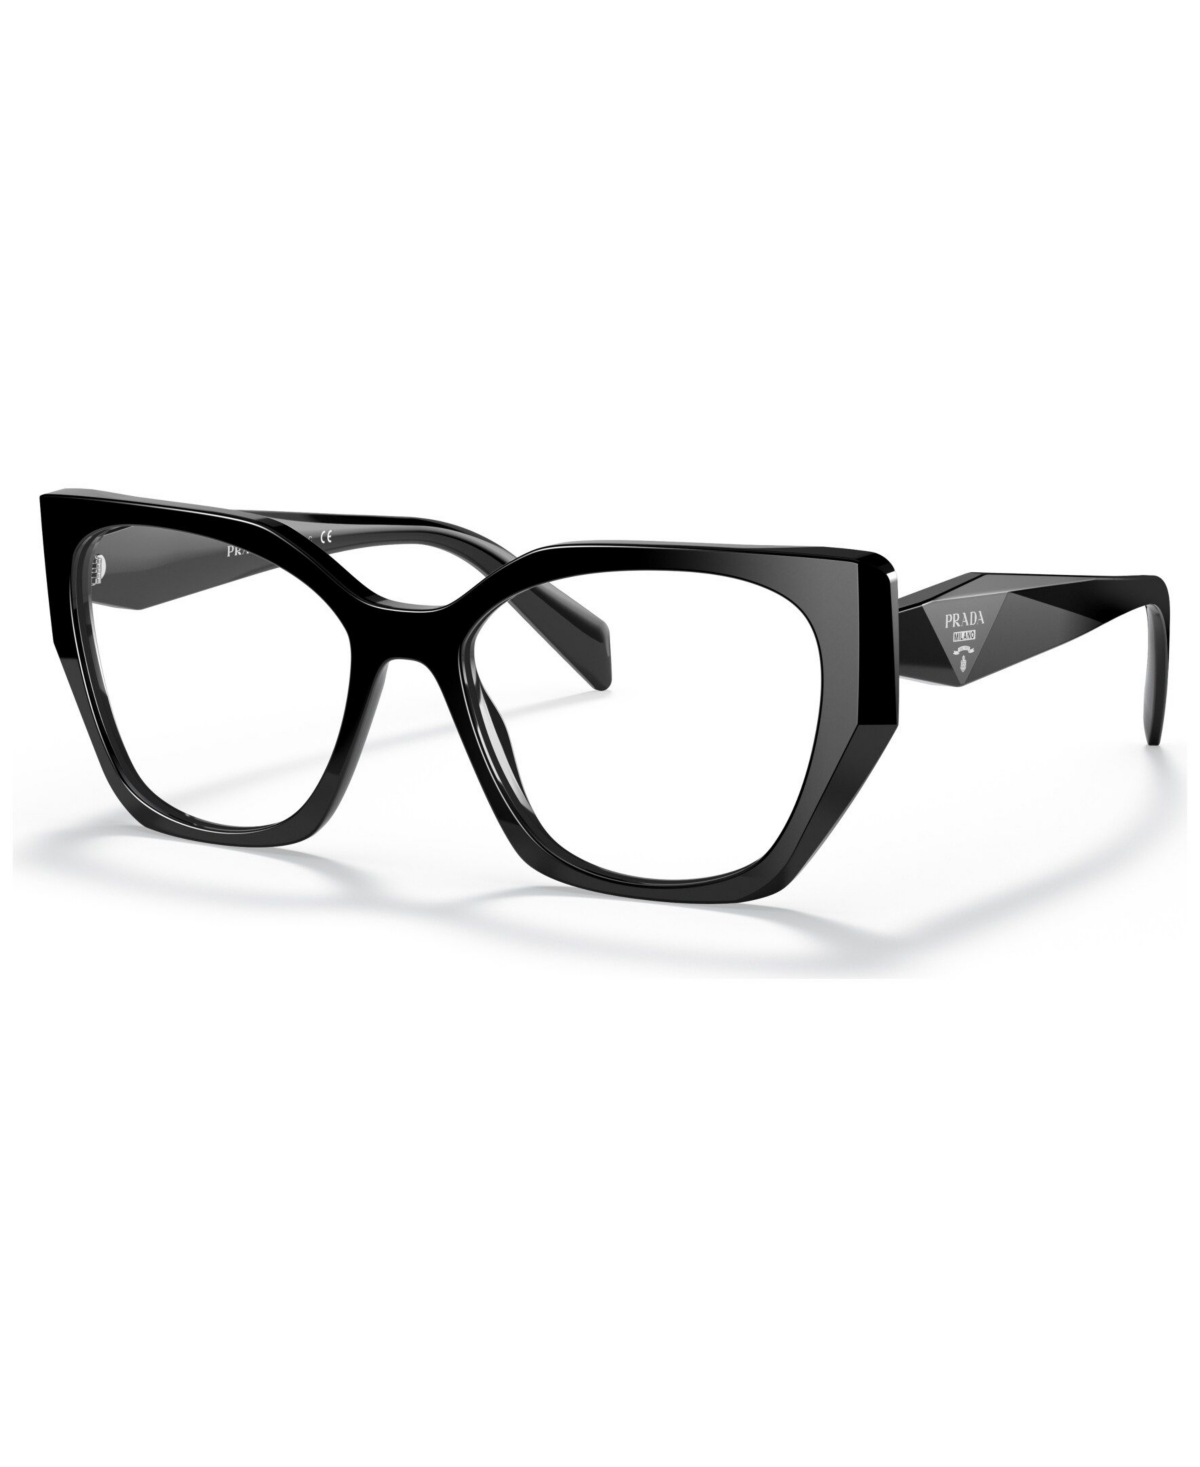 PRADA PR 18WV Women's Irregular Eyeglasses & Reviews - Women - Macy's